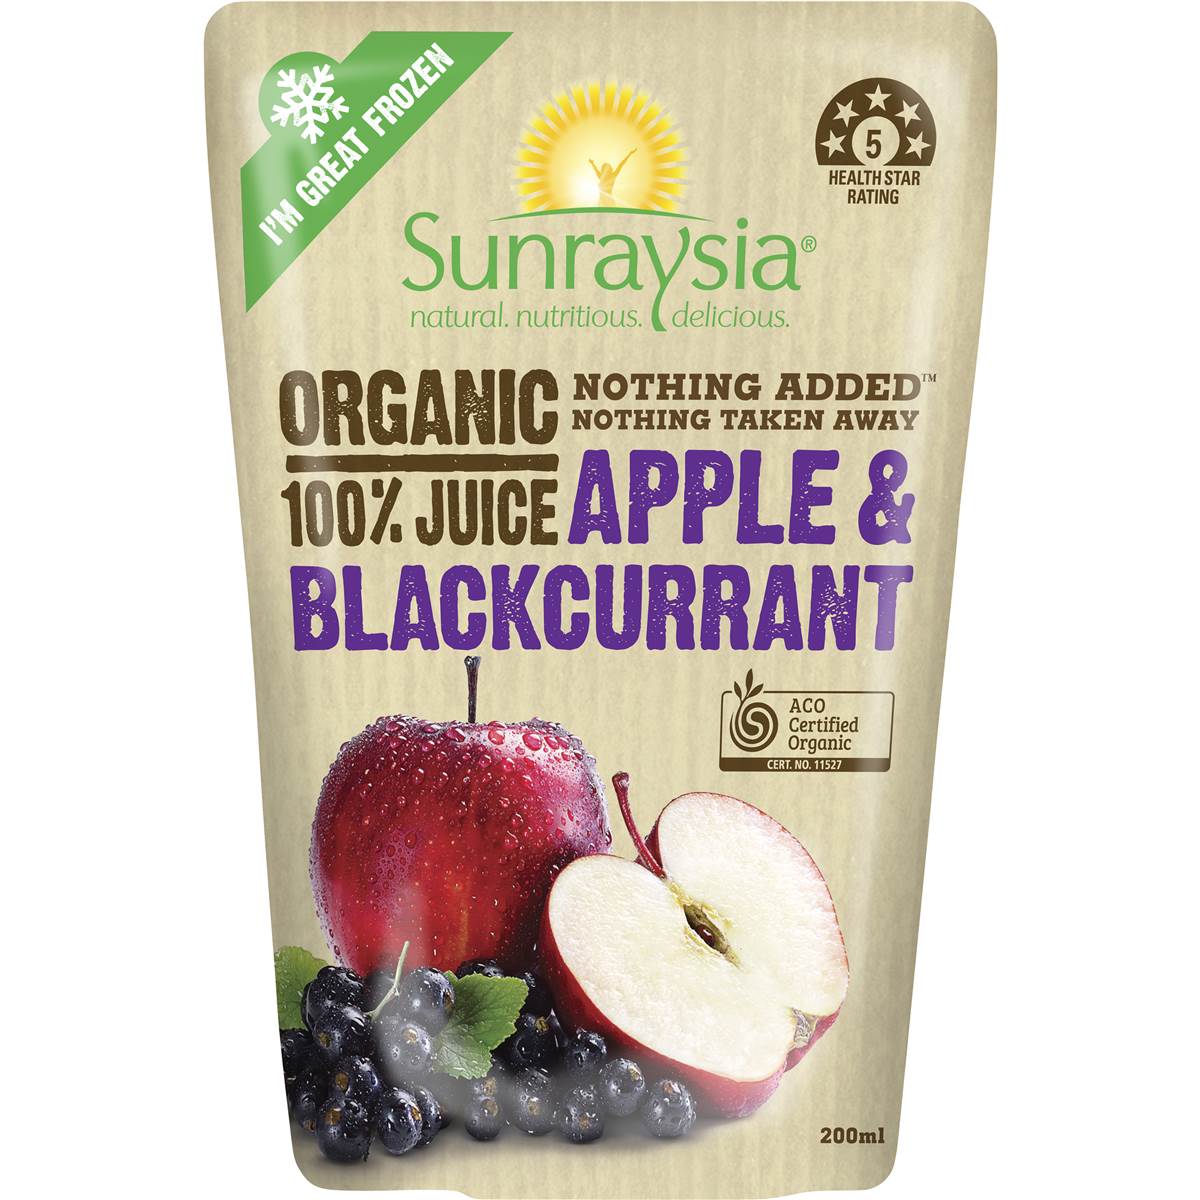 Calories in Sunraysia Organic Apple & Blackcurrant 100% Juice